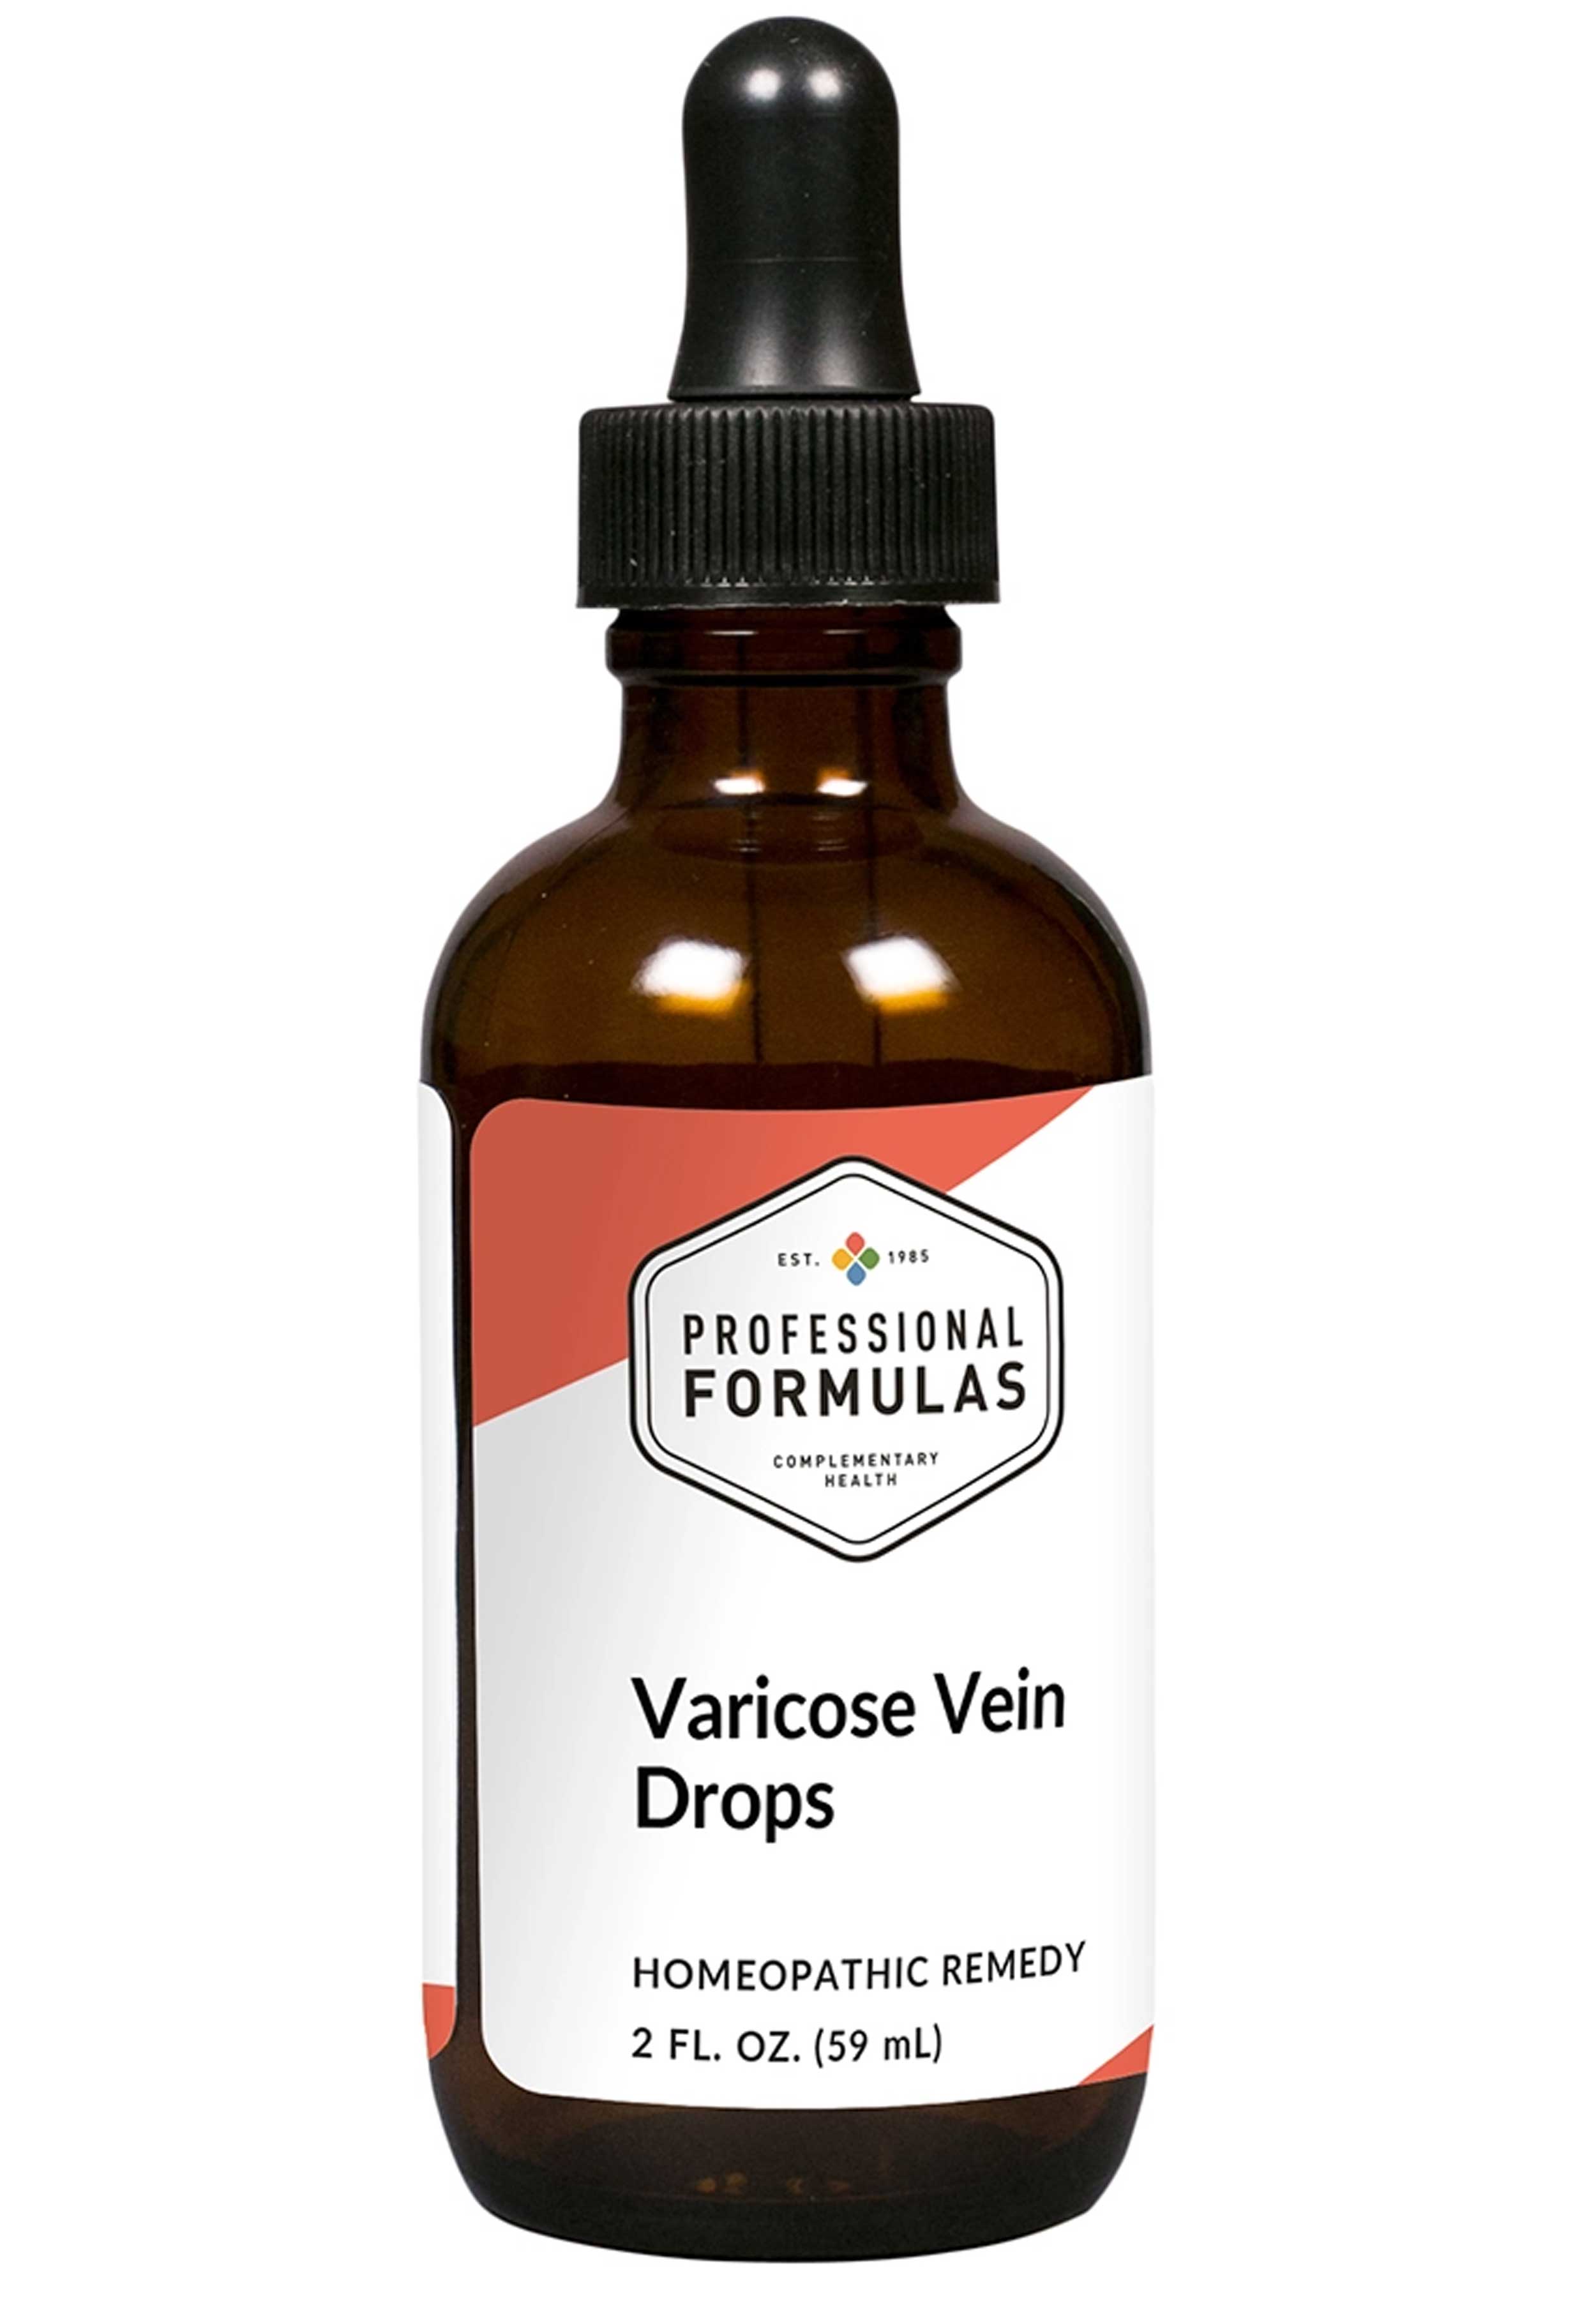 Professional Formulas Varicose Vein Drops